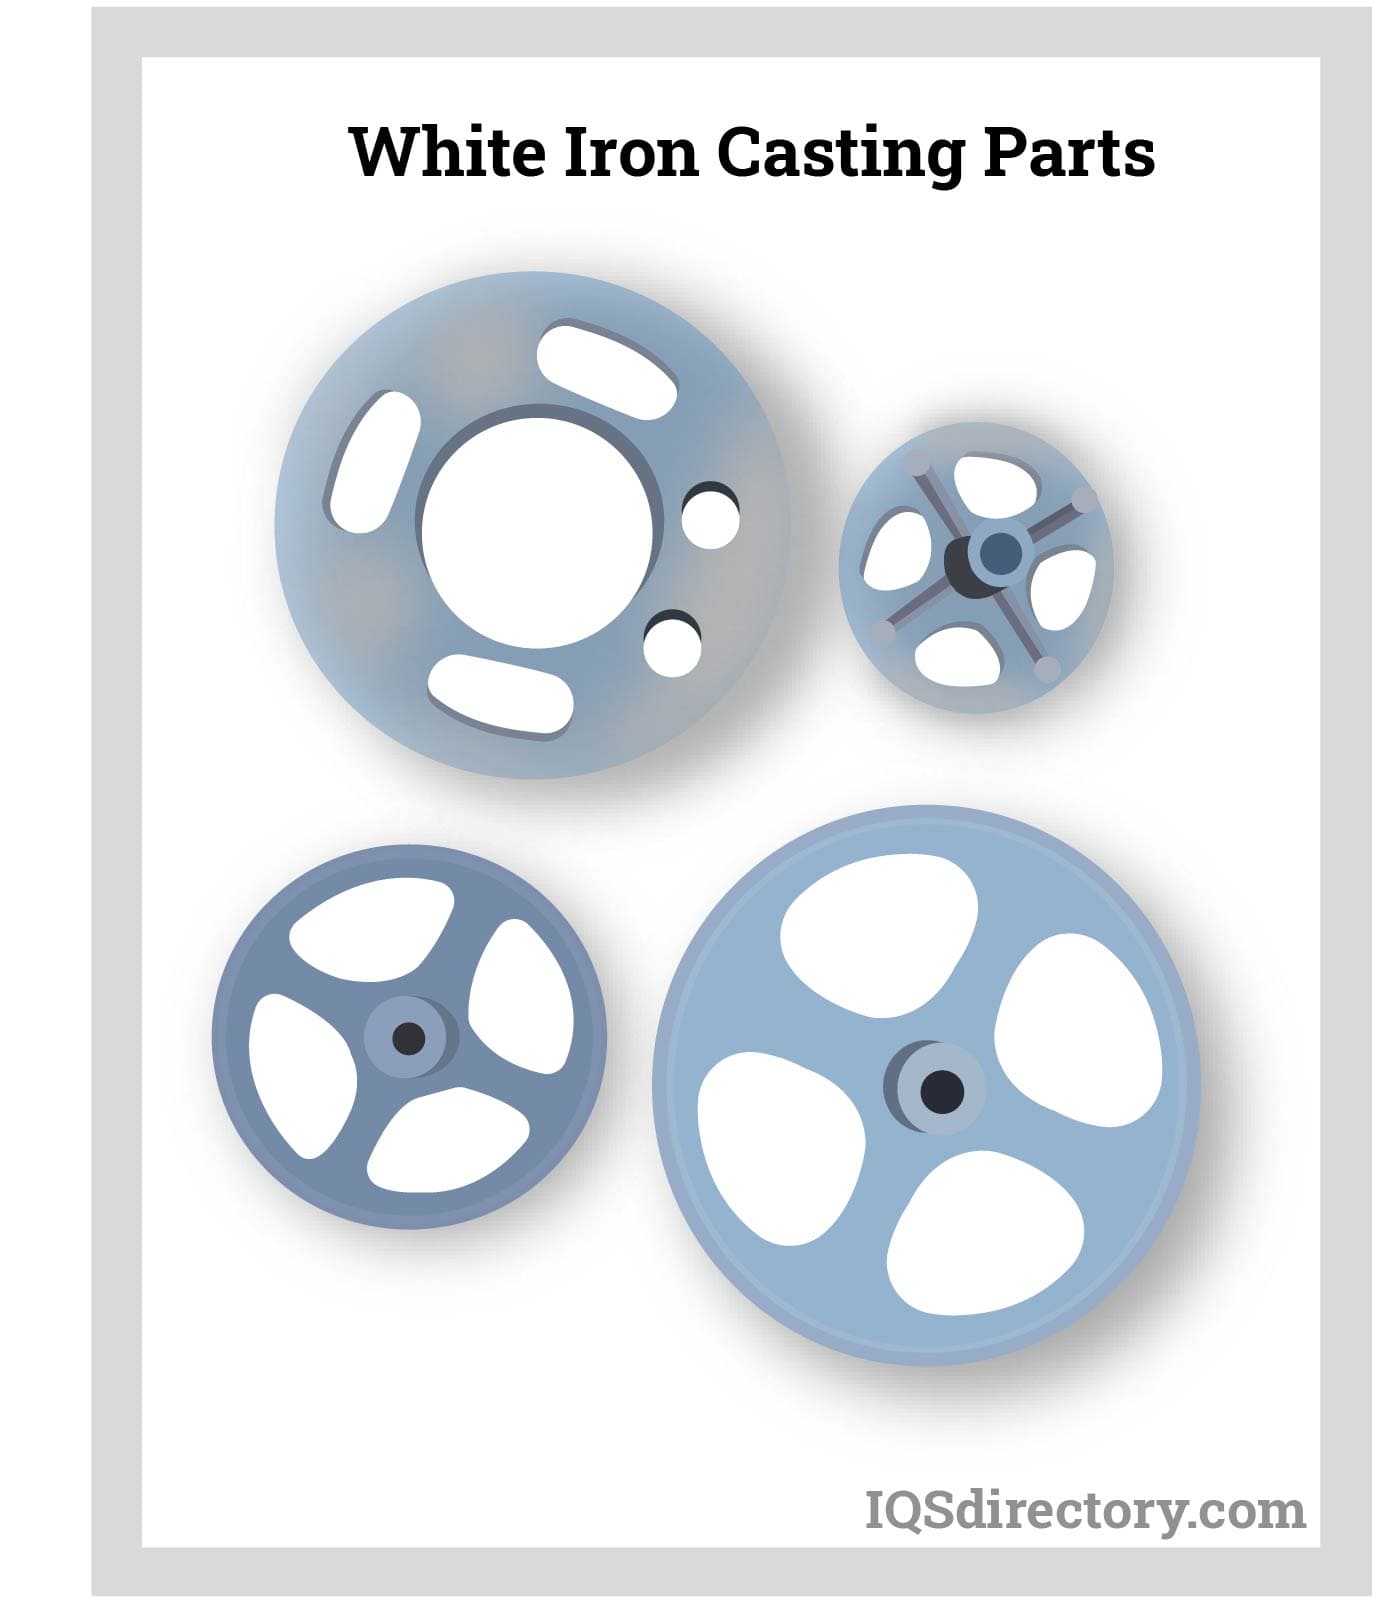 White Iron Casting Parts